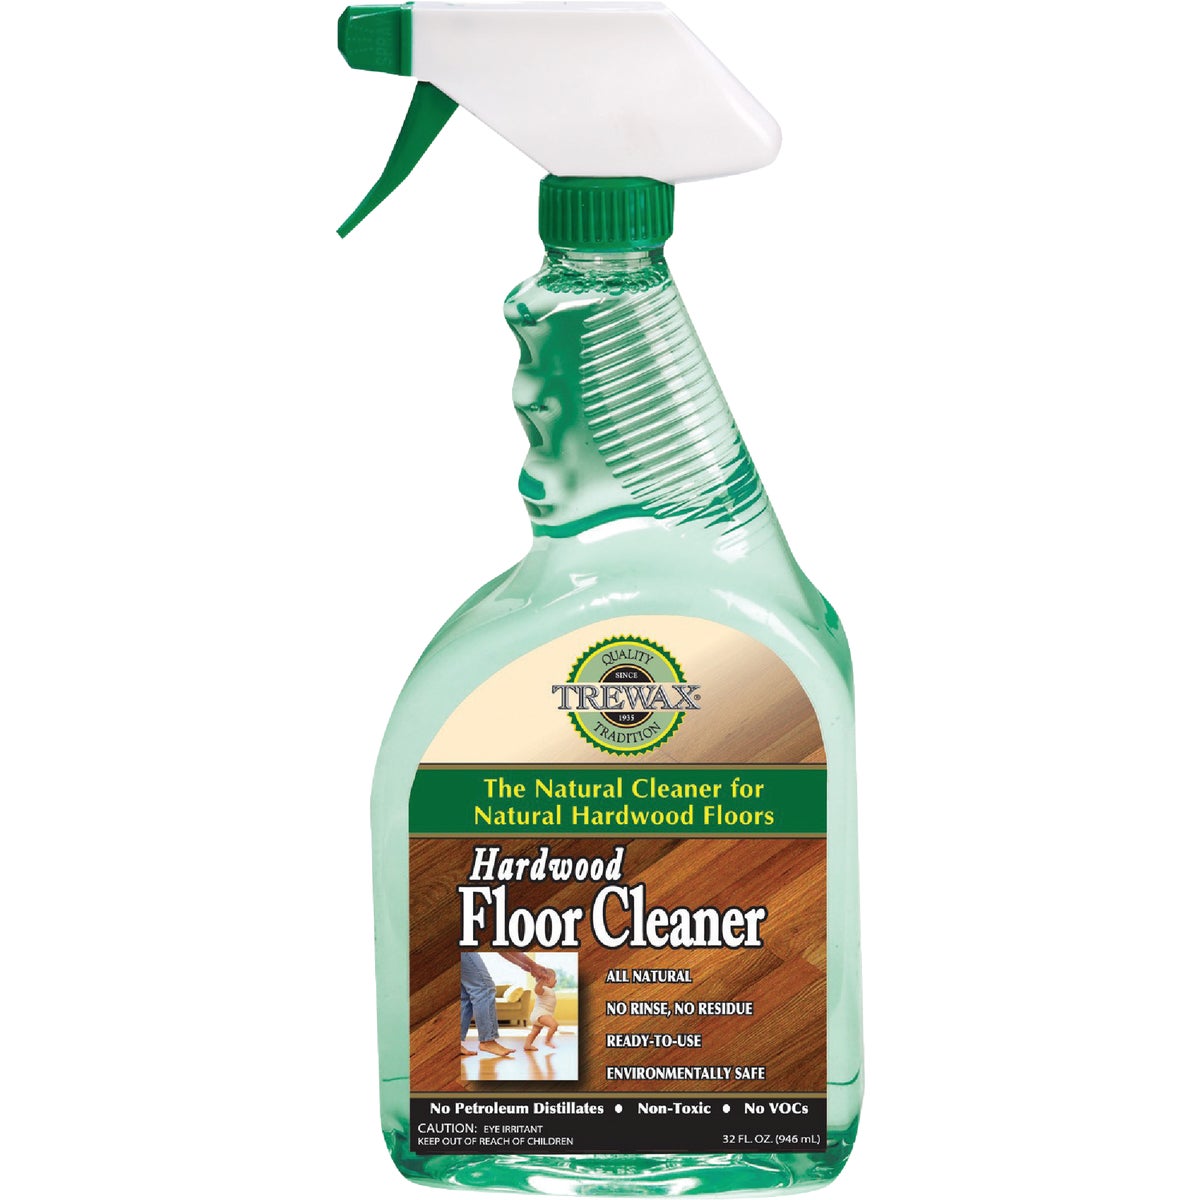 Item 631515, The natural cleaner for hard wood floors. Trigger spray bottle.